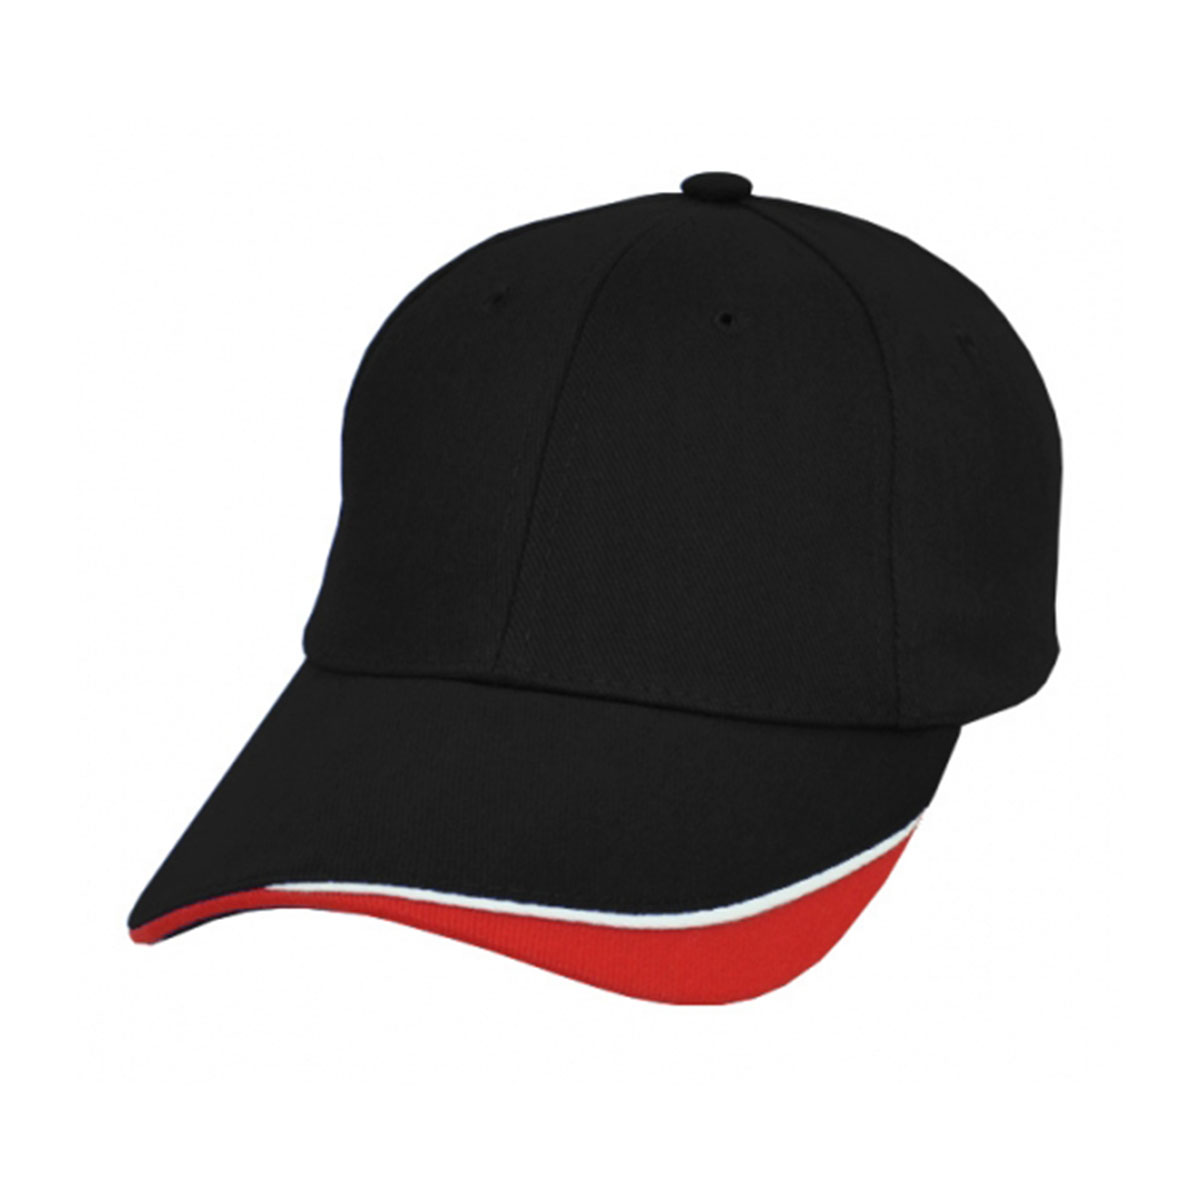 Razor Cap-Black / White / Red